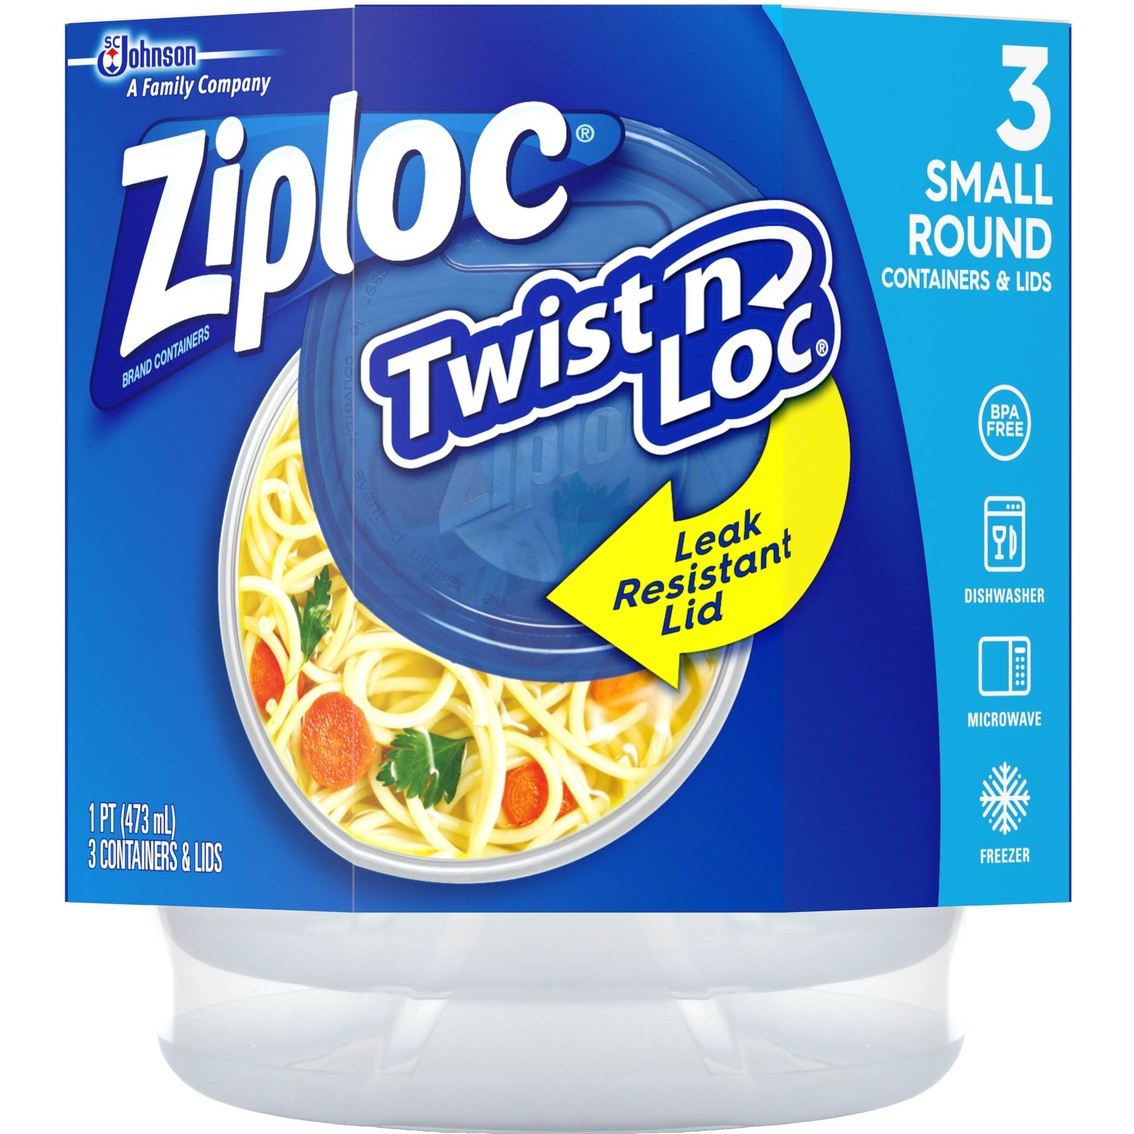 Ziploc Large BPA Free Container Bowl, 2 ct